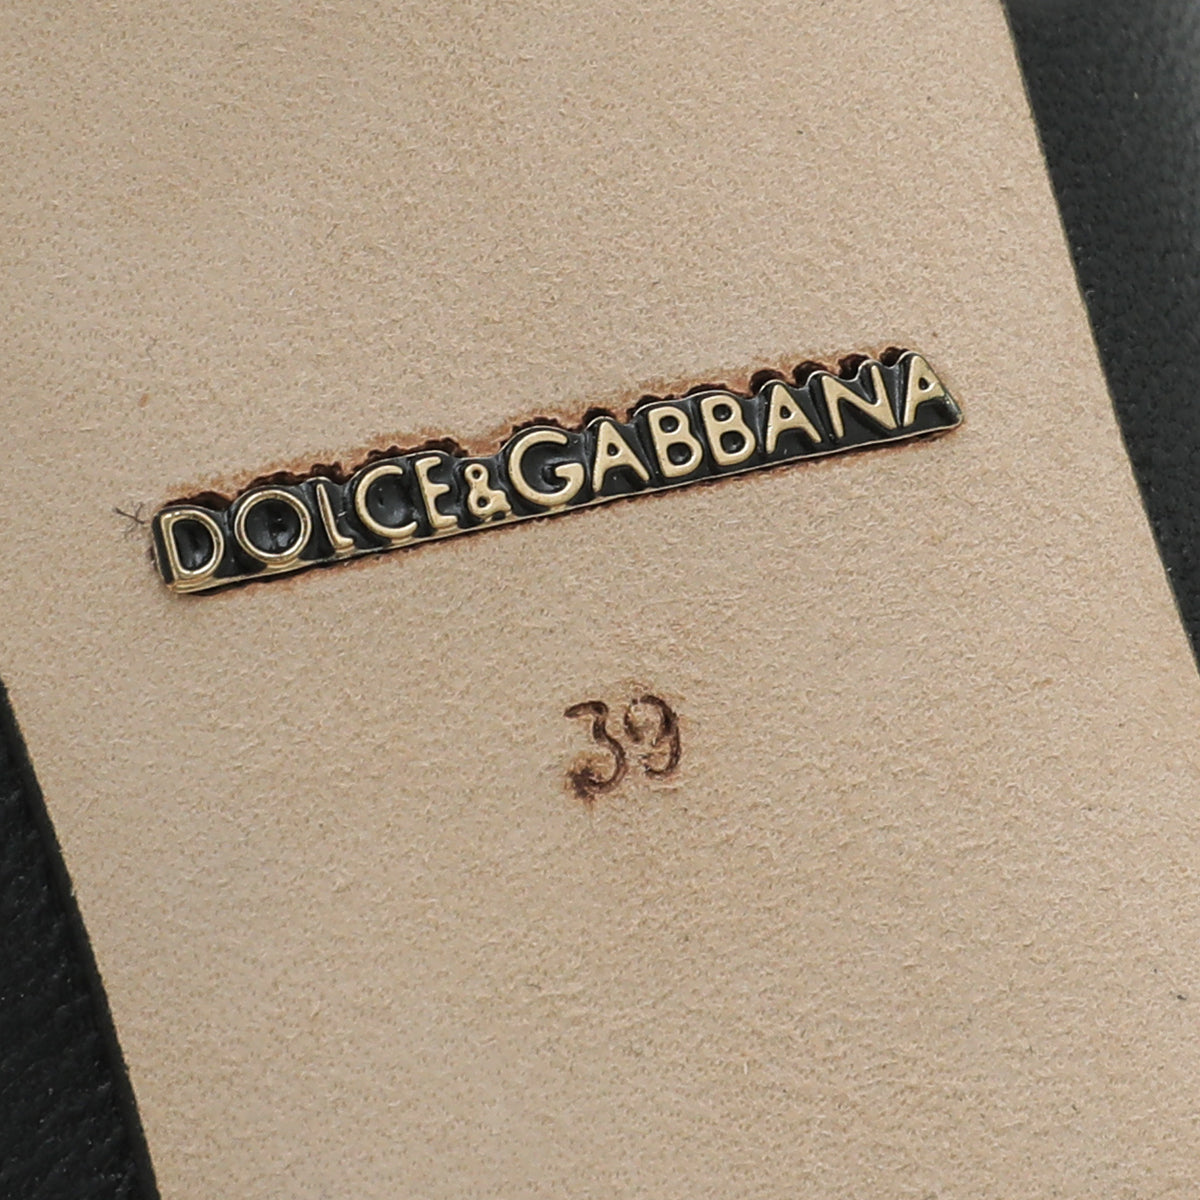 Dolce & Gabbana Black Kate Flower Embroidered Pump 39